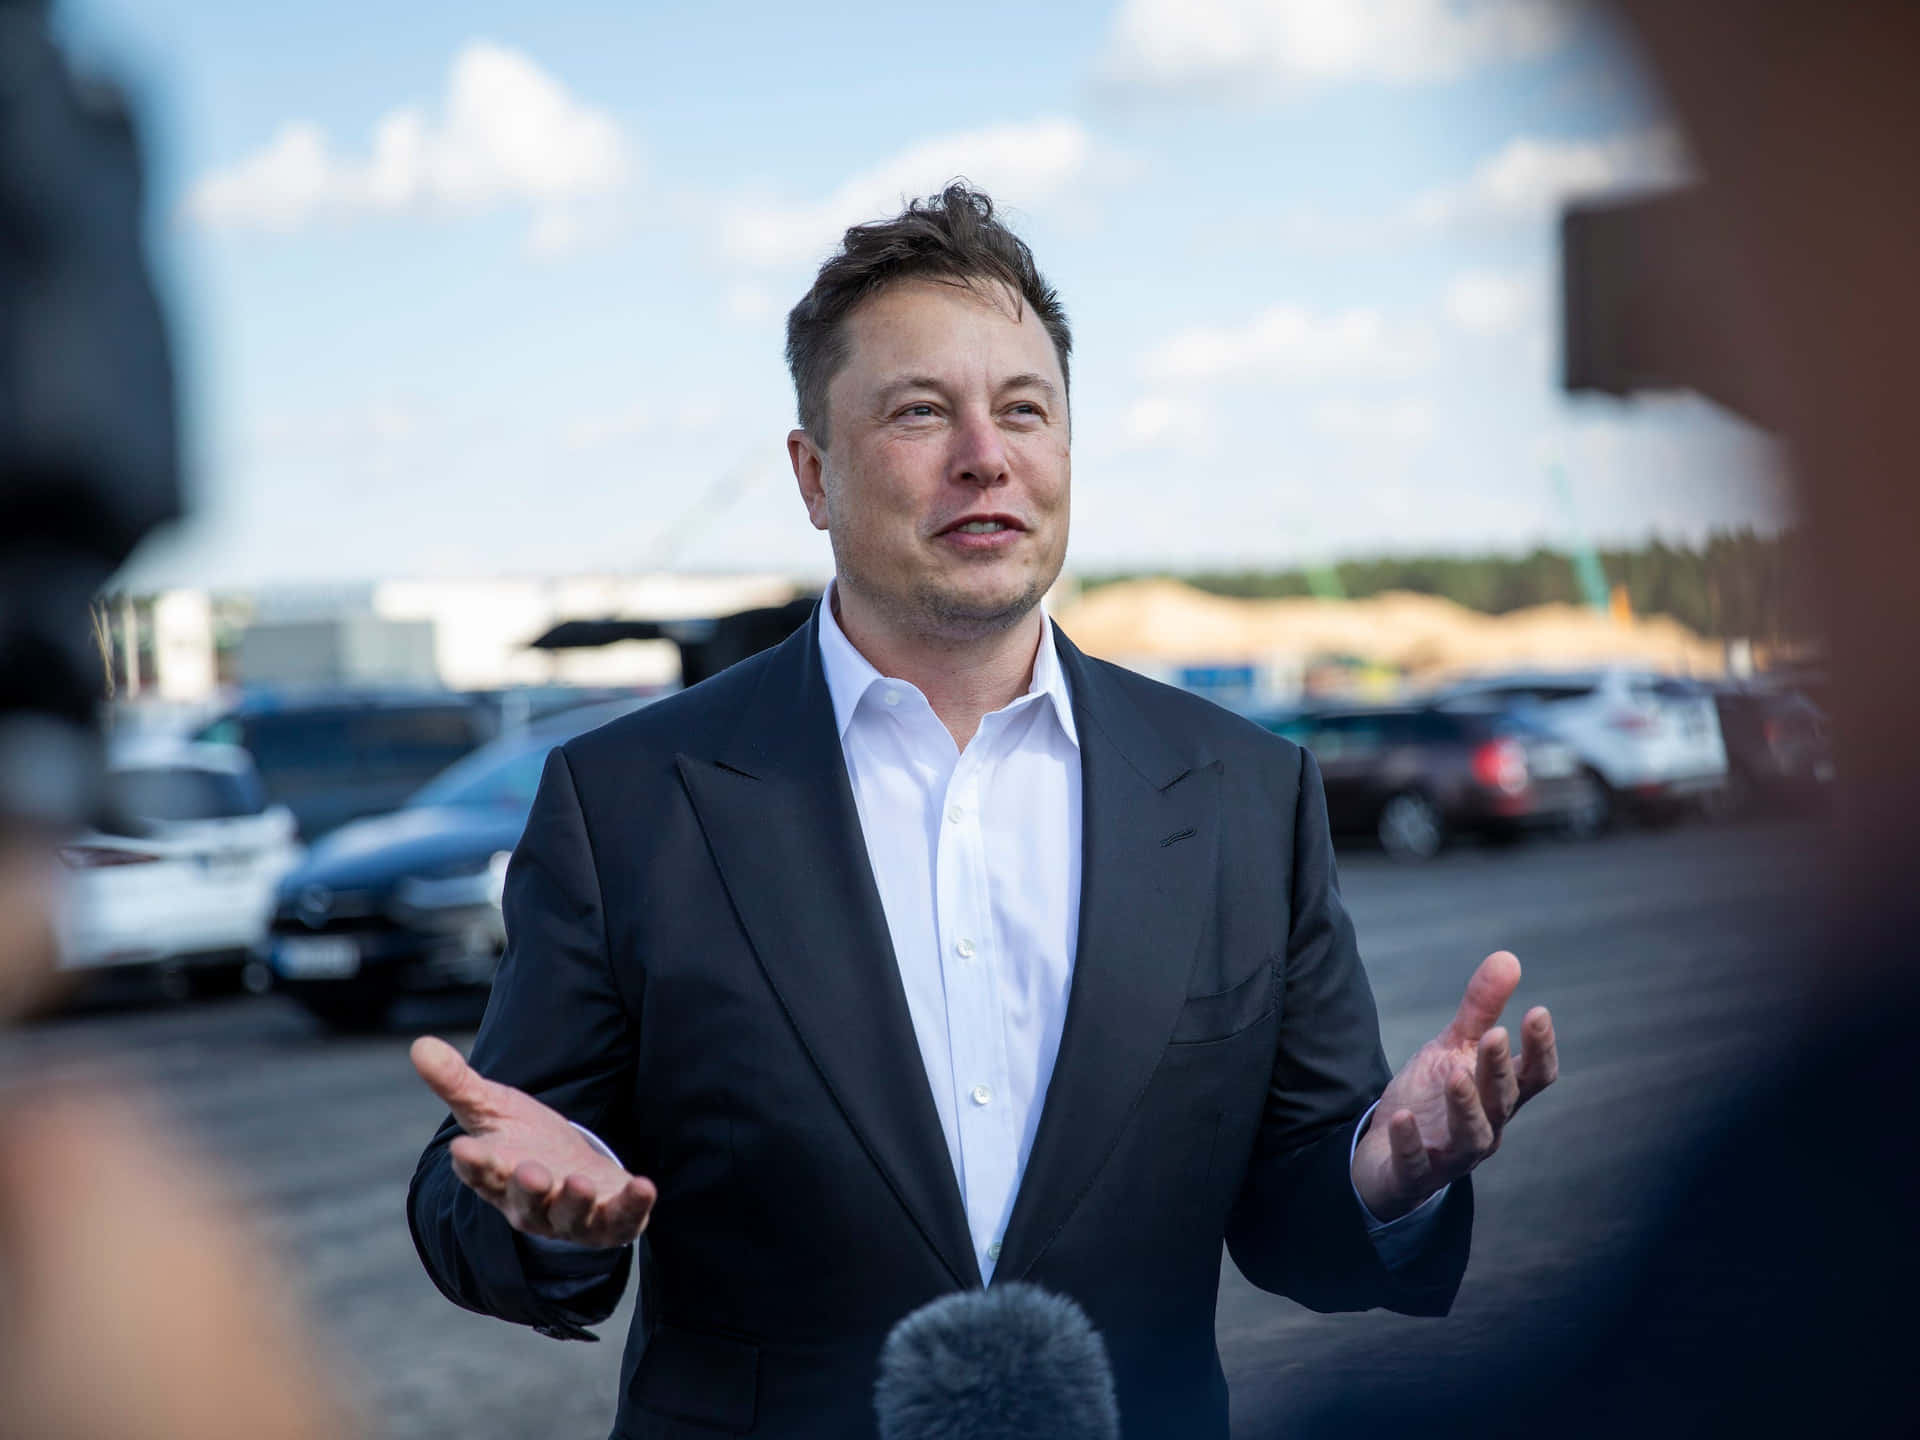 Visionary Entrepreneur and Innovator Elon Musk